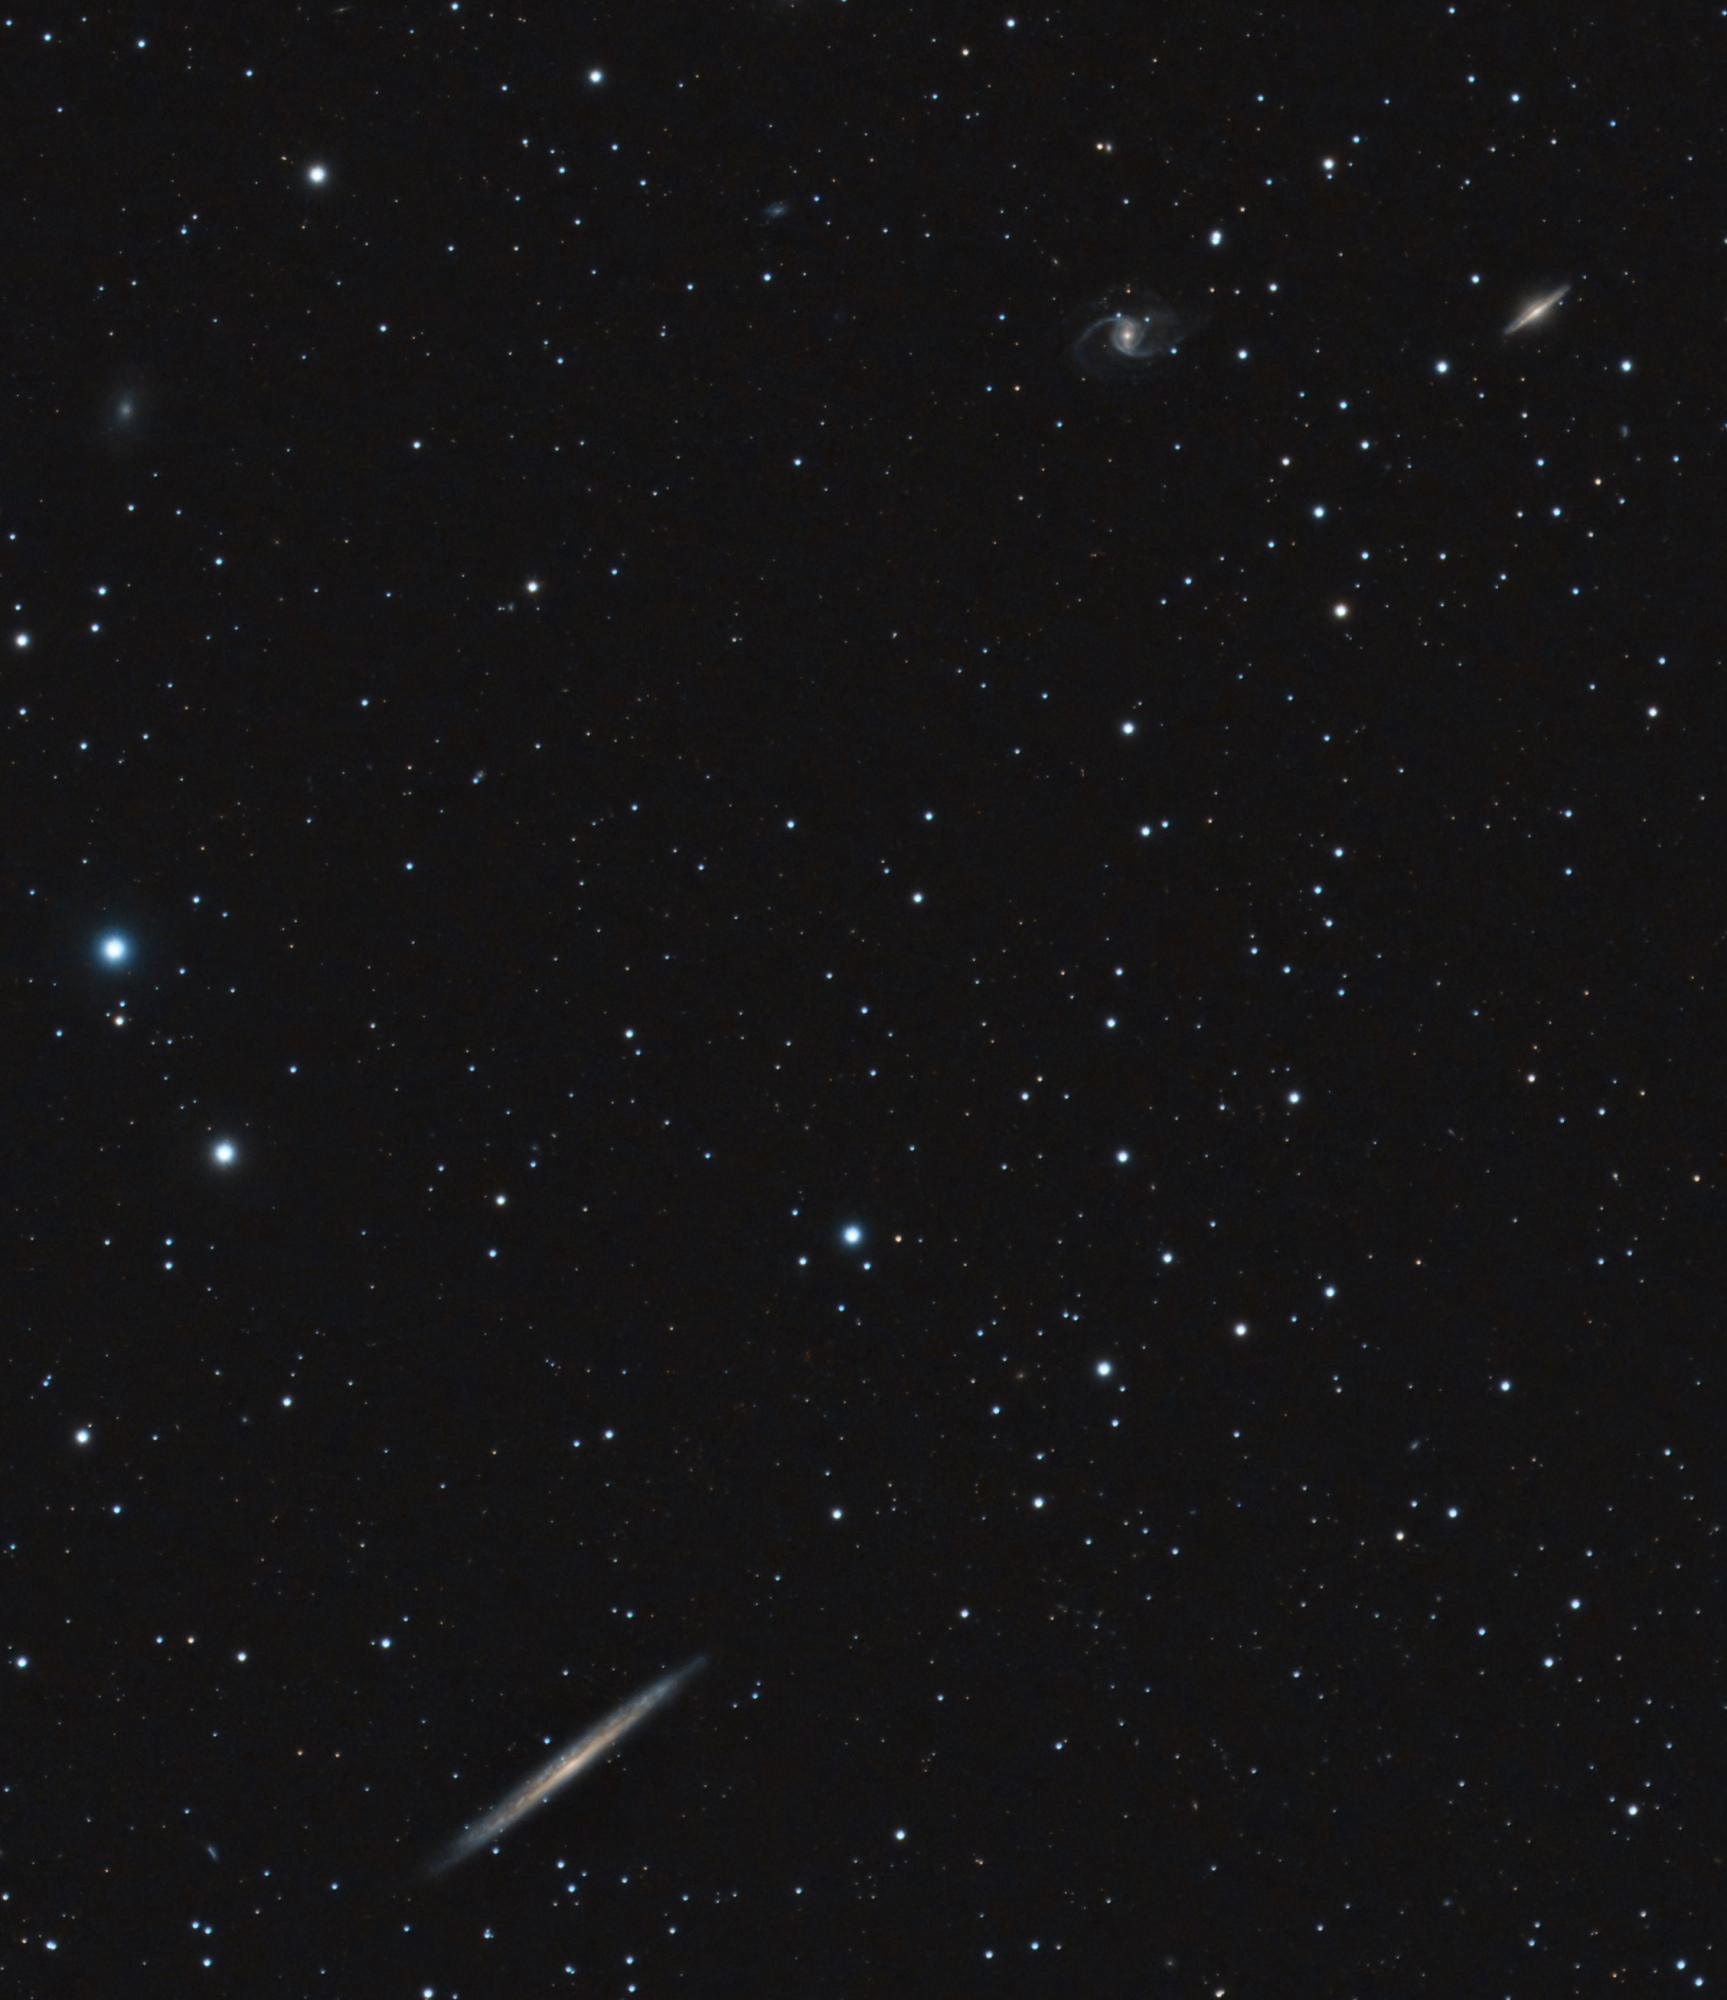 NGC5907-Berche-70x180sec-LPSD2-crop.thumb.jpg.44eb0979c00f3bd12396f61adab1cf30.jpg